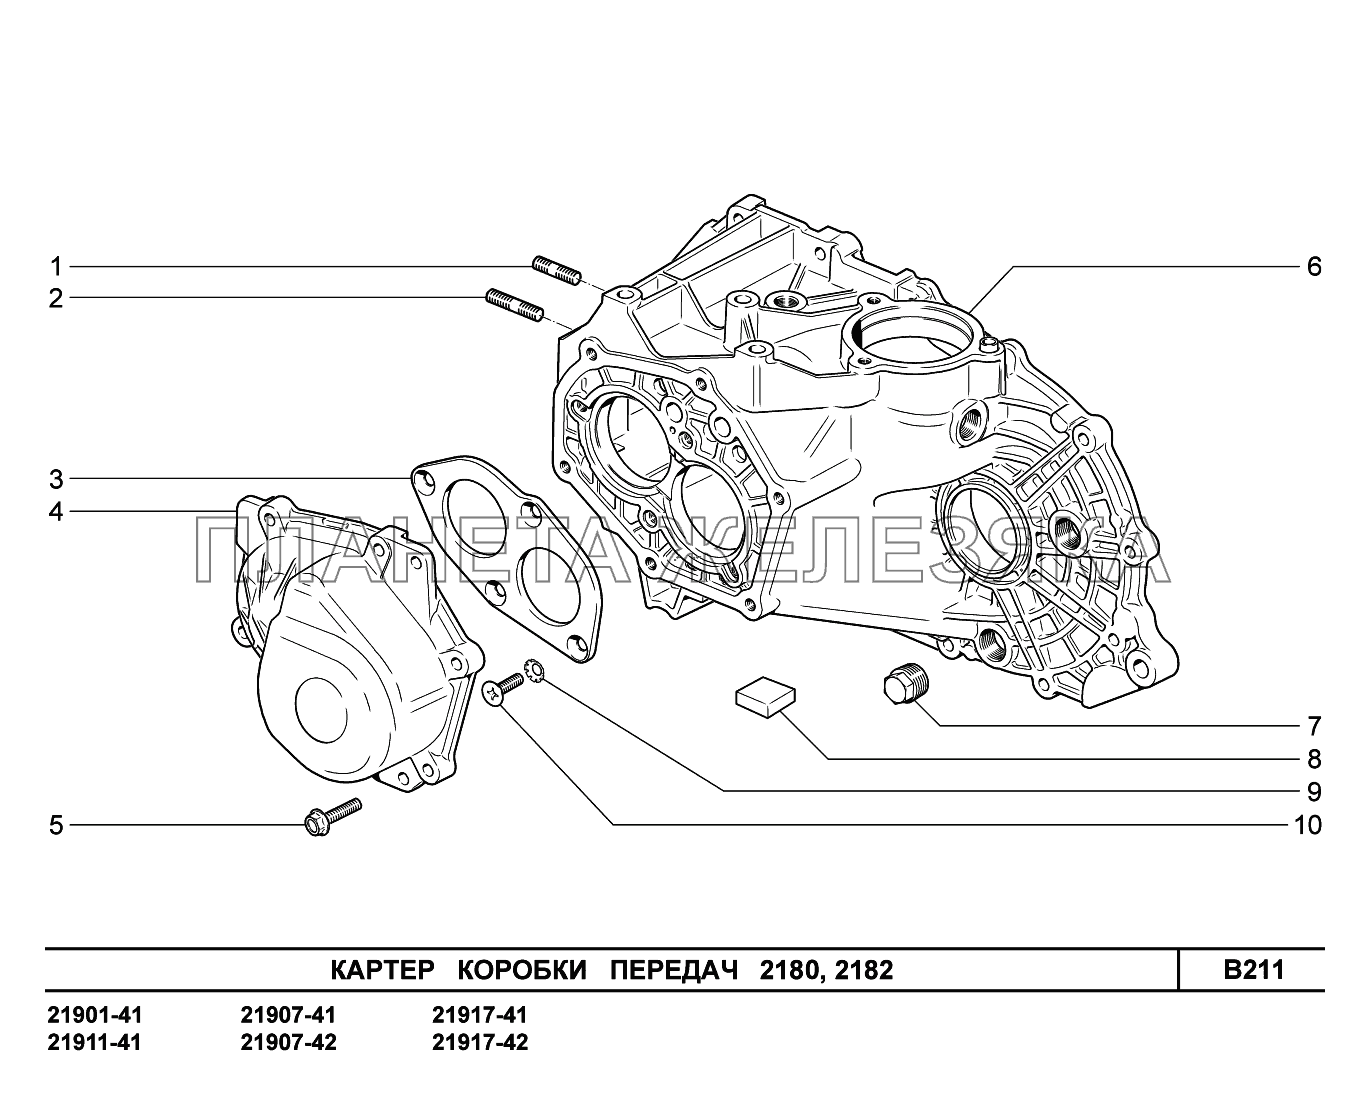 B211. Картер коробки передач Lada Granta-2190